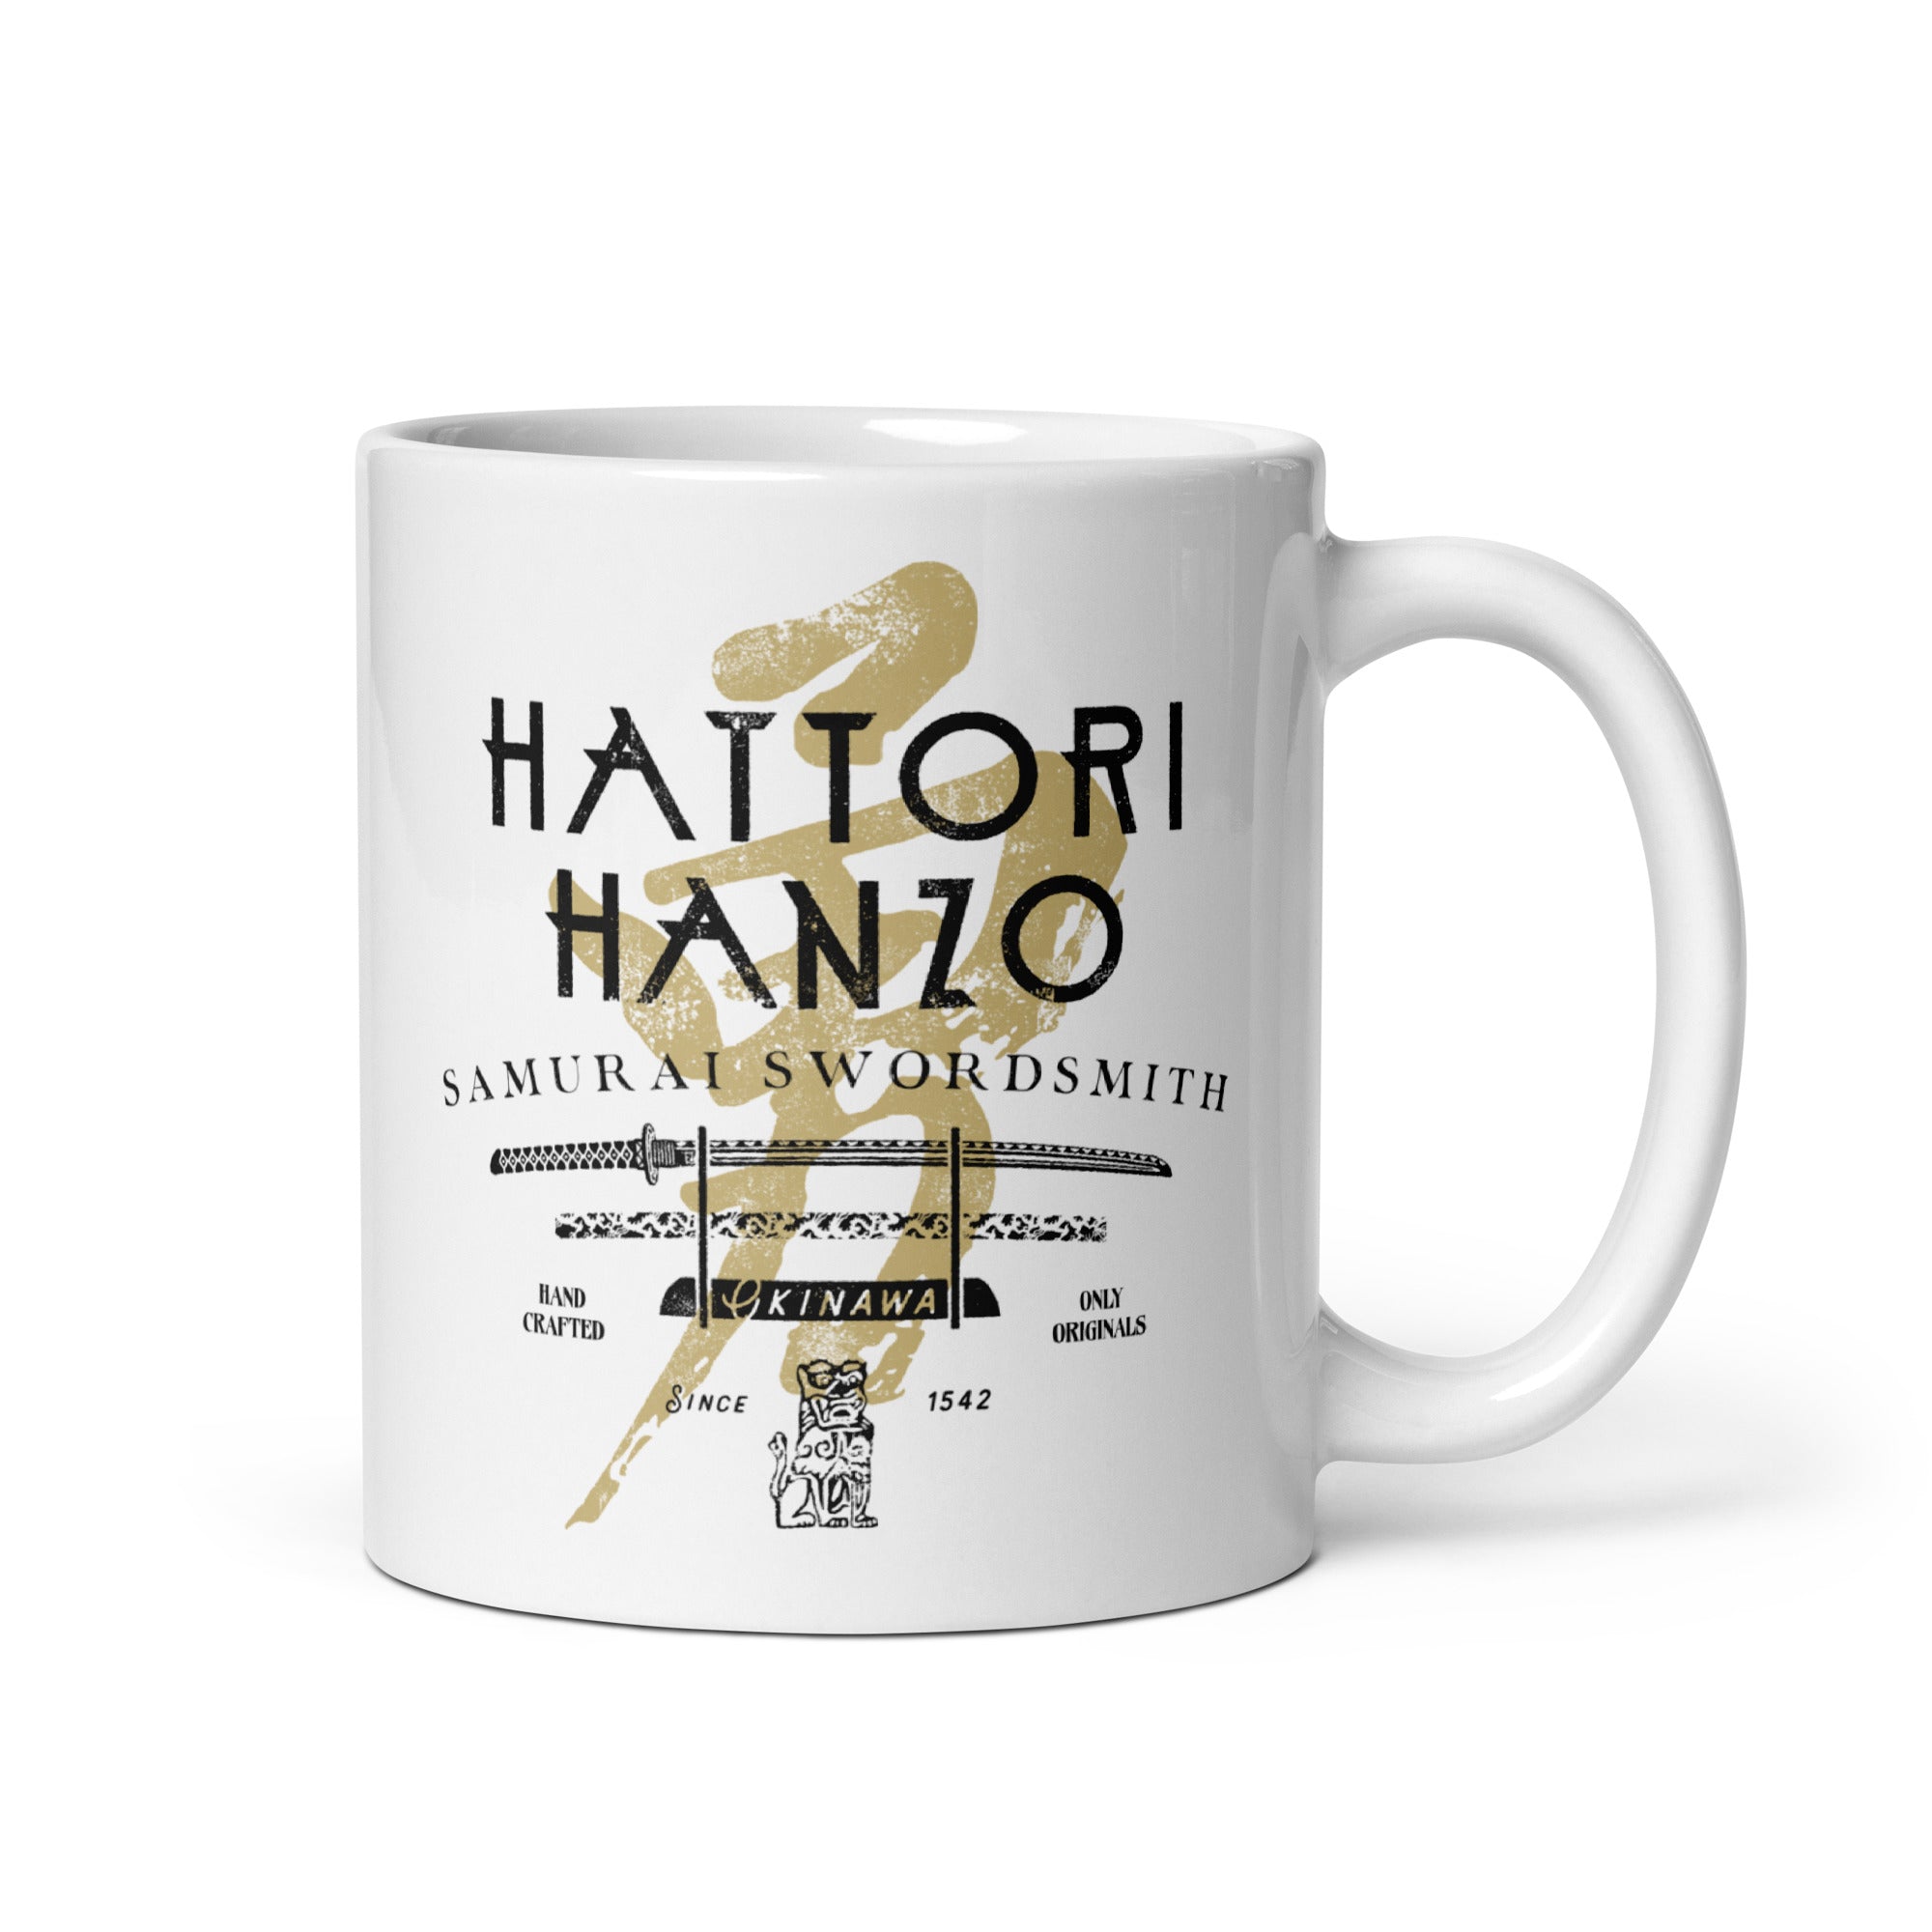 Hattori Hanzo Samurai Swordsmith - 11oz Coffee Mug